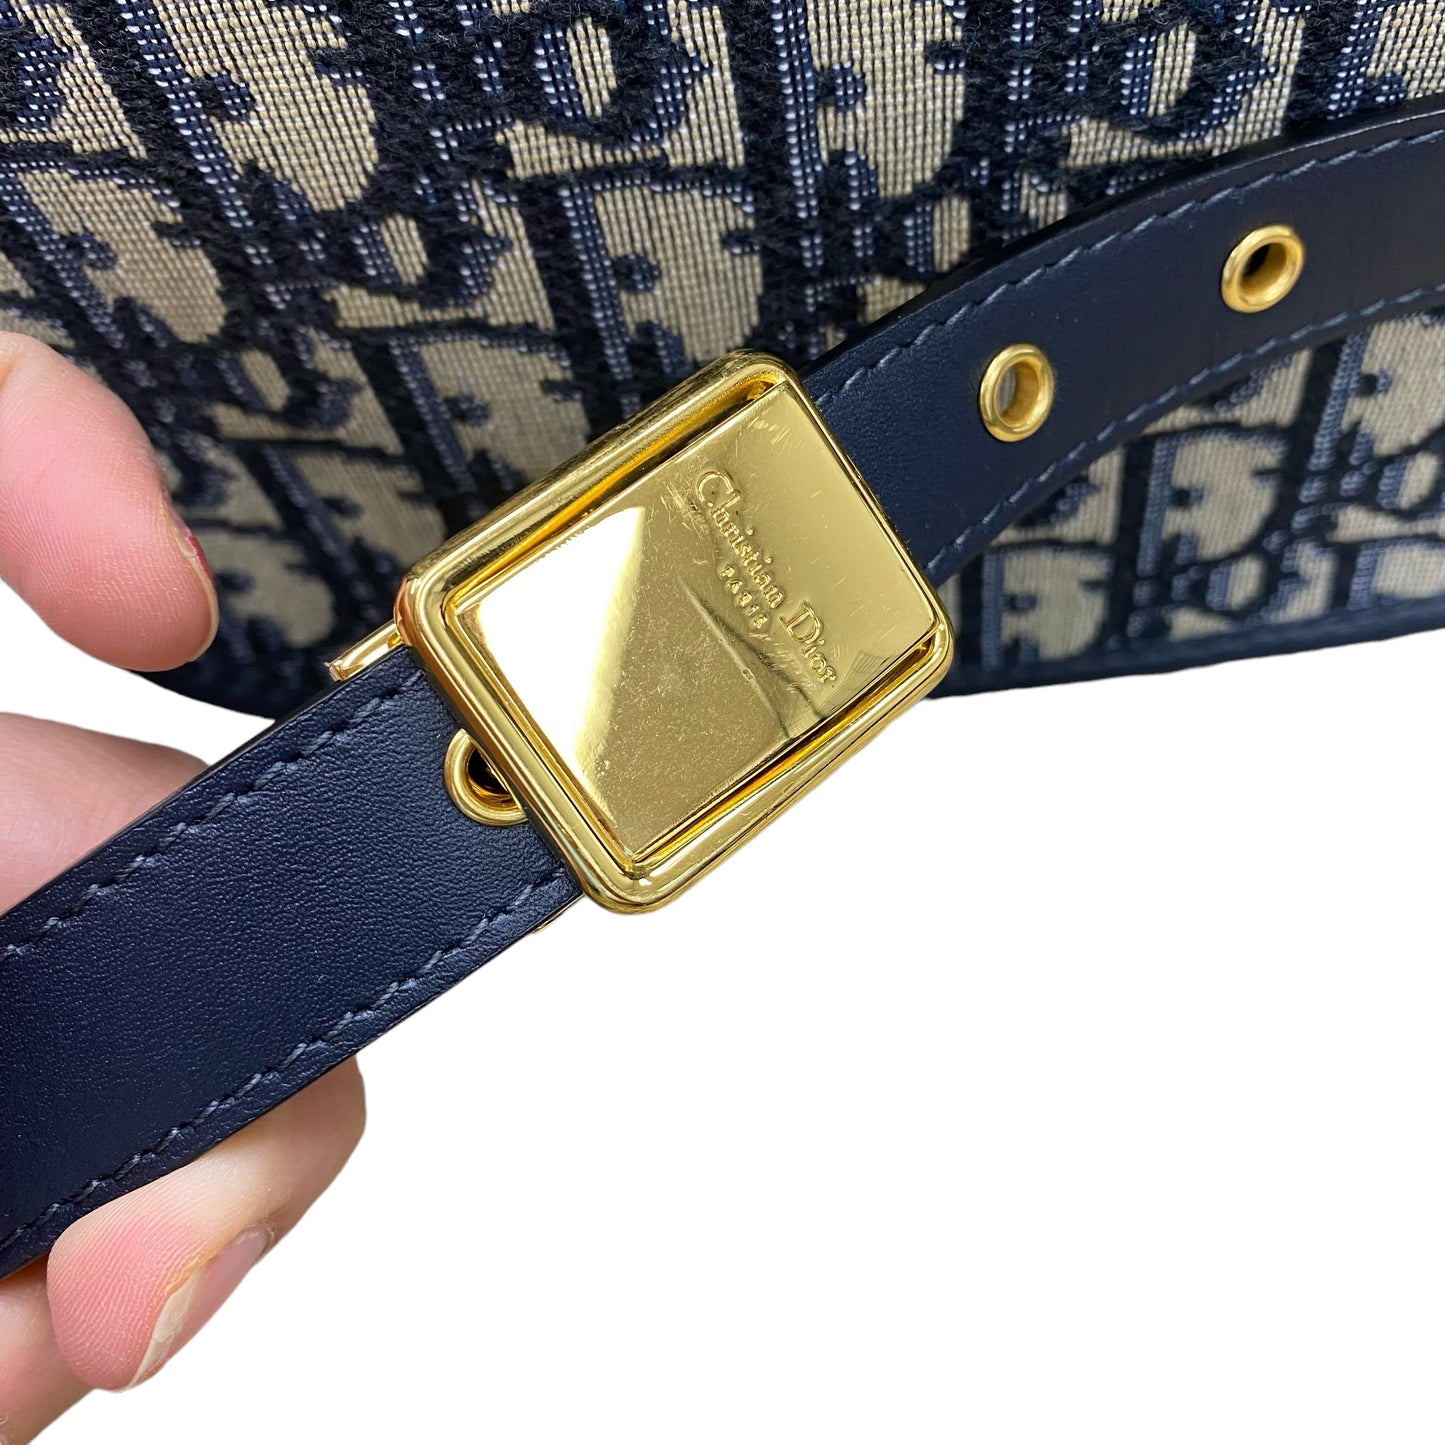 Handbag Luxury Designer Dior, Size Medium